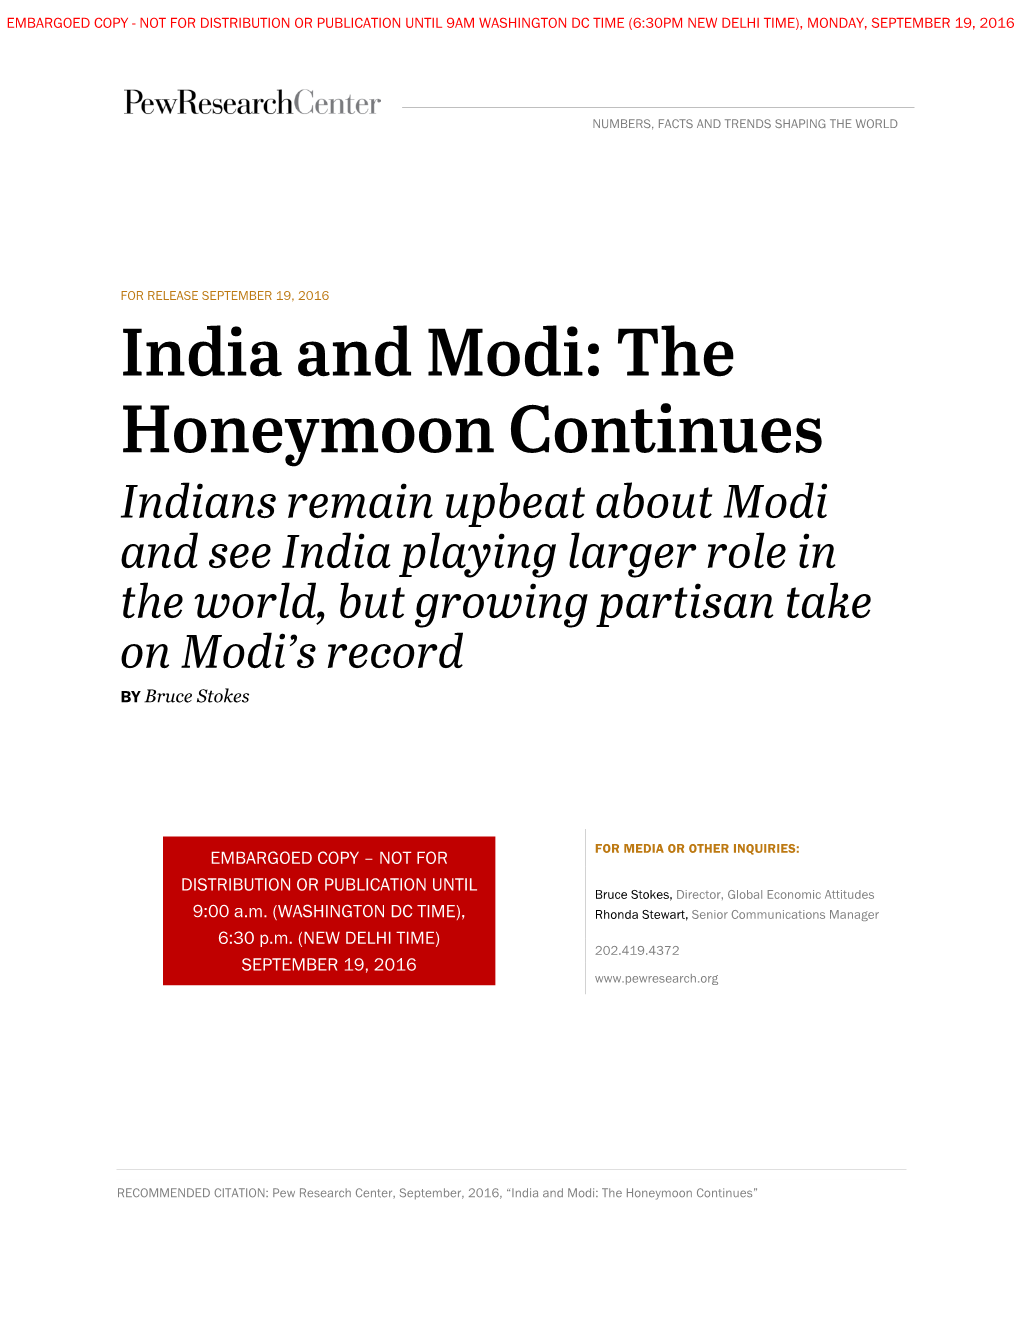 India and Modi